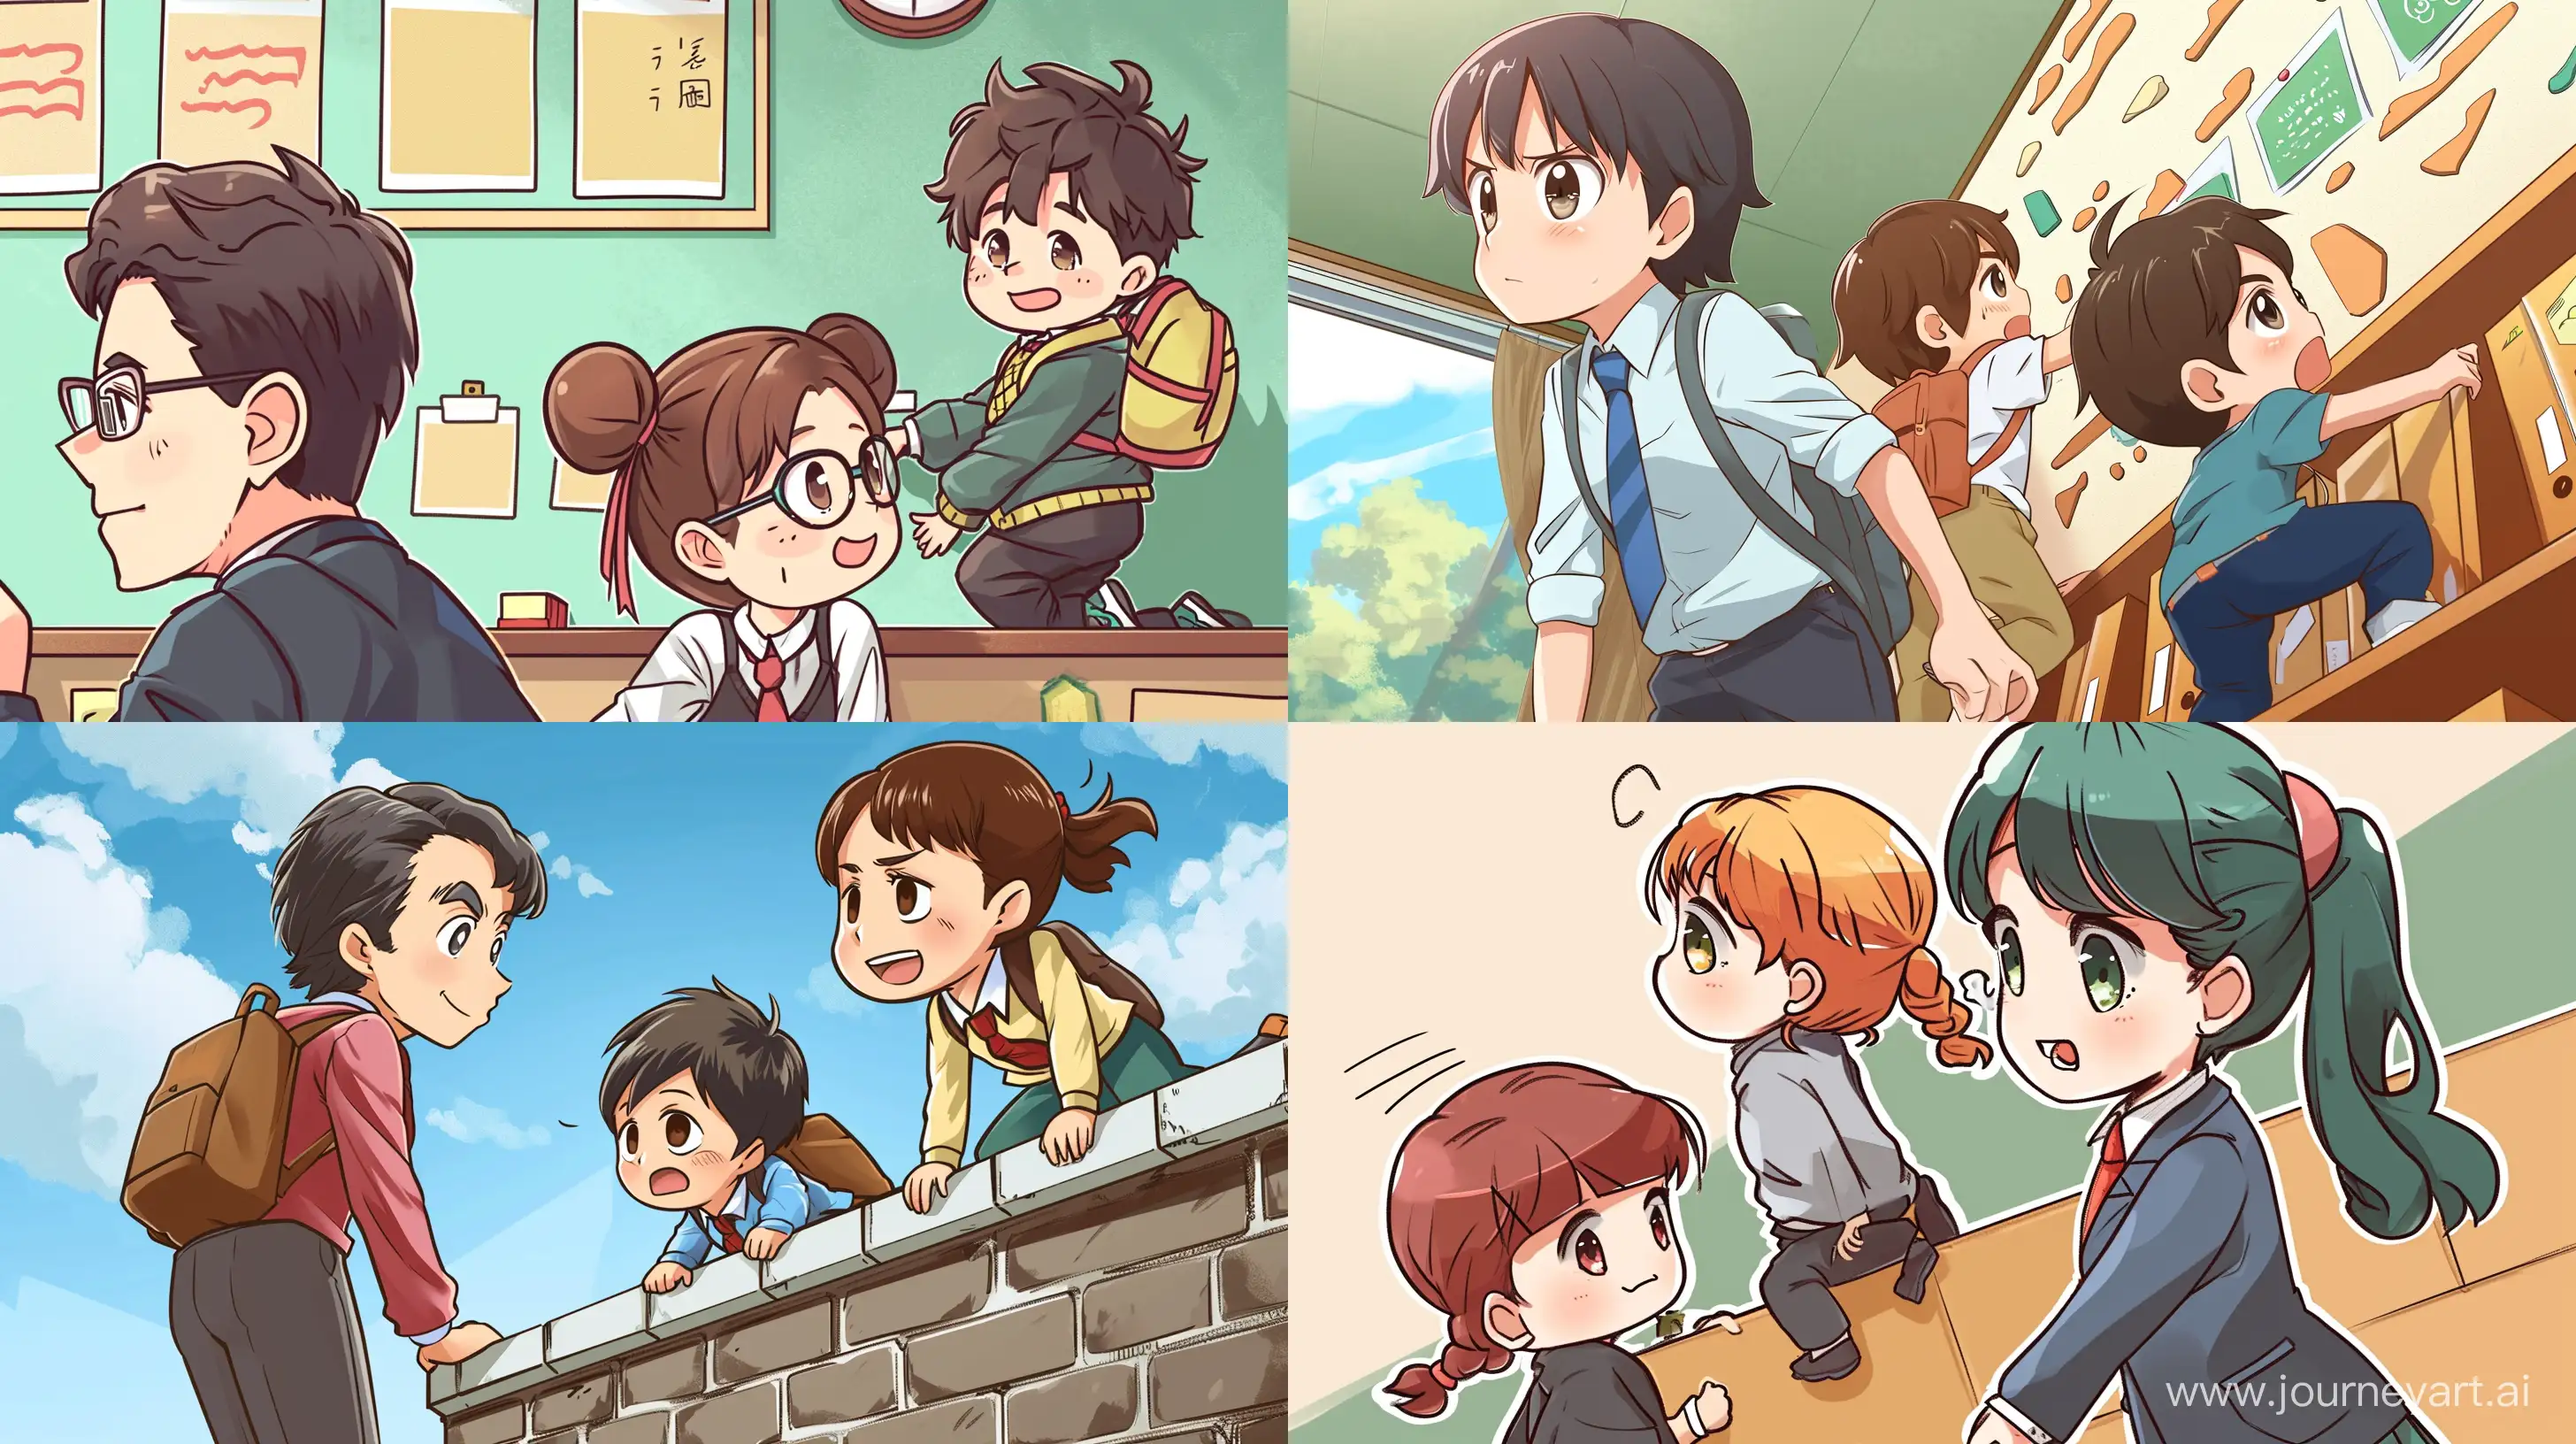 Chibi-Anime-Teacher-Watches-Students-Climbing-Classroom-Wall